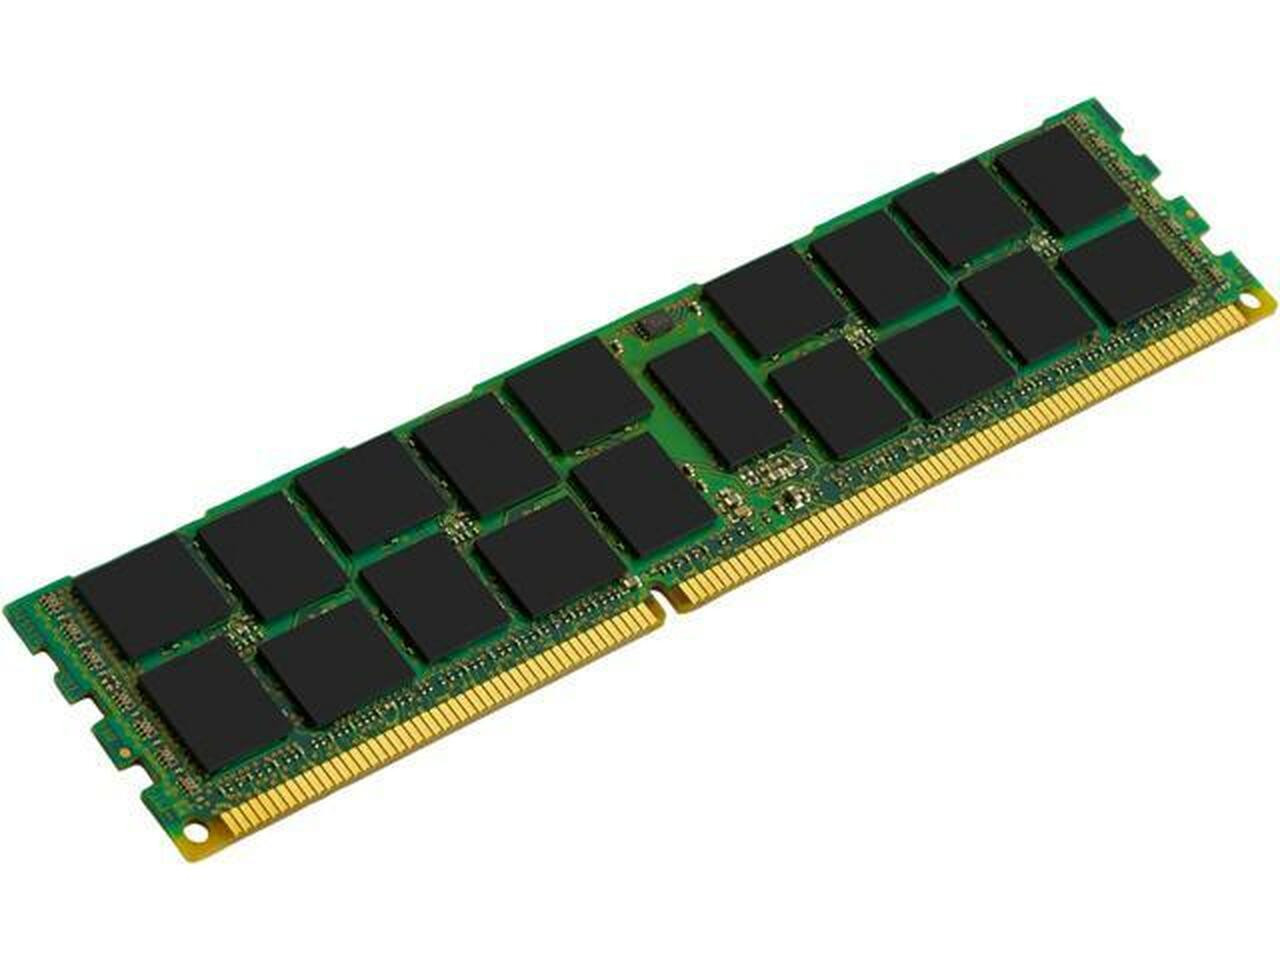 Netpatibles 4GB DDR3 SDRAM Memory Module - MEMDR340LSL06ER13NPM